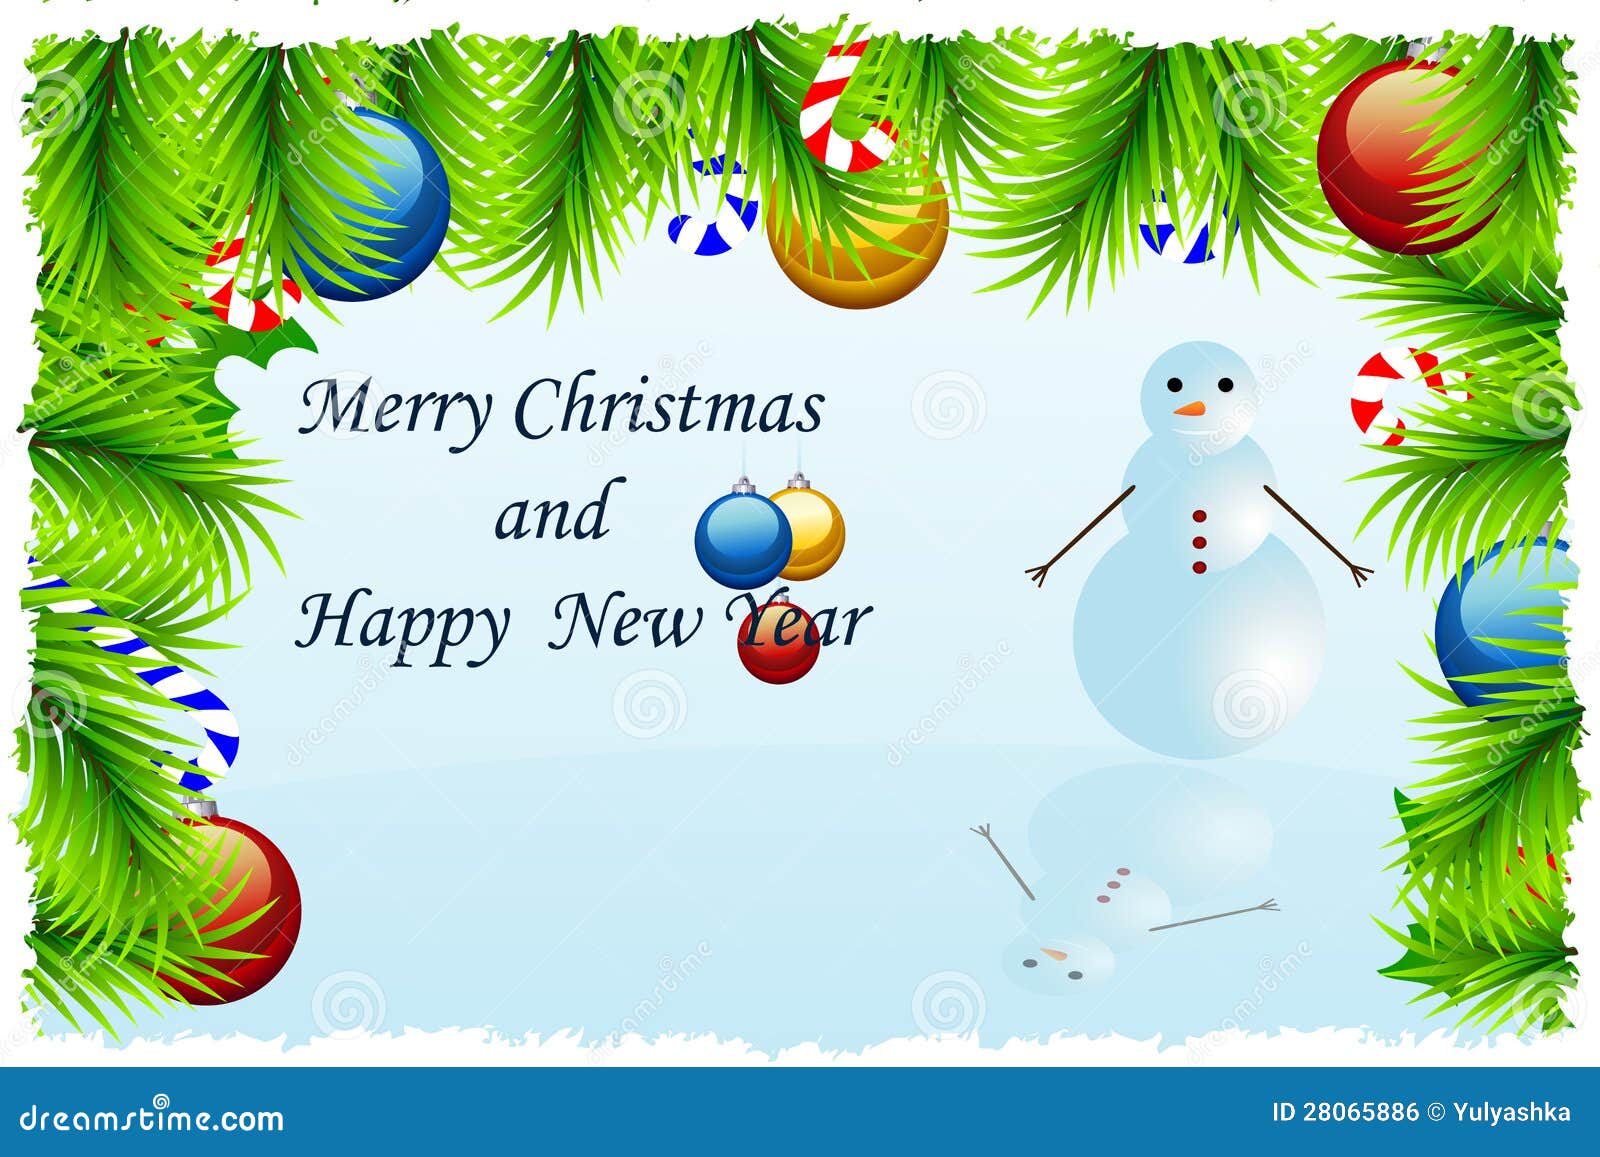 Template Christmas Greeting Card Royalty Free Stock Image - Image ...